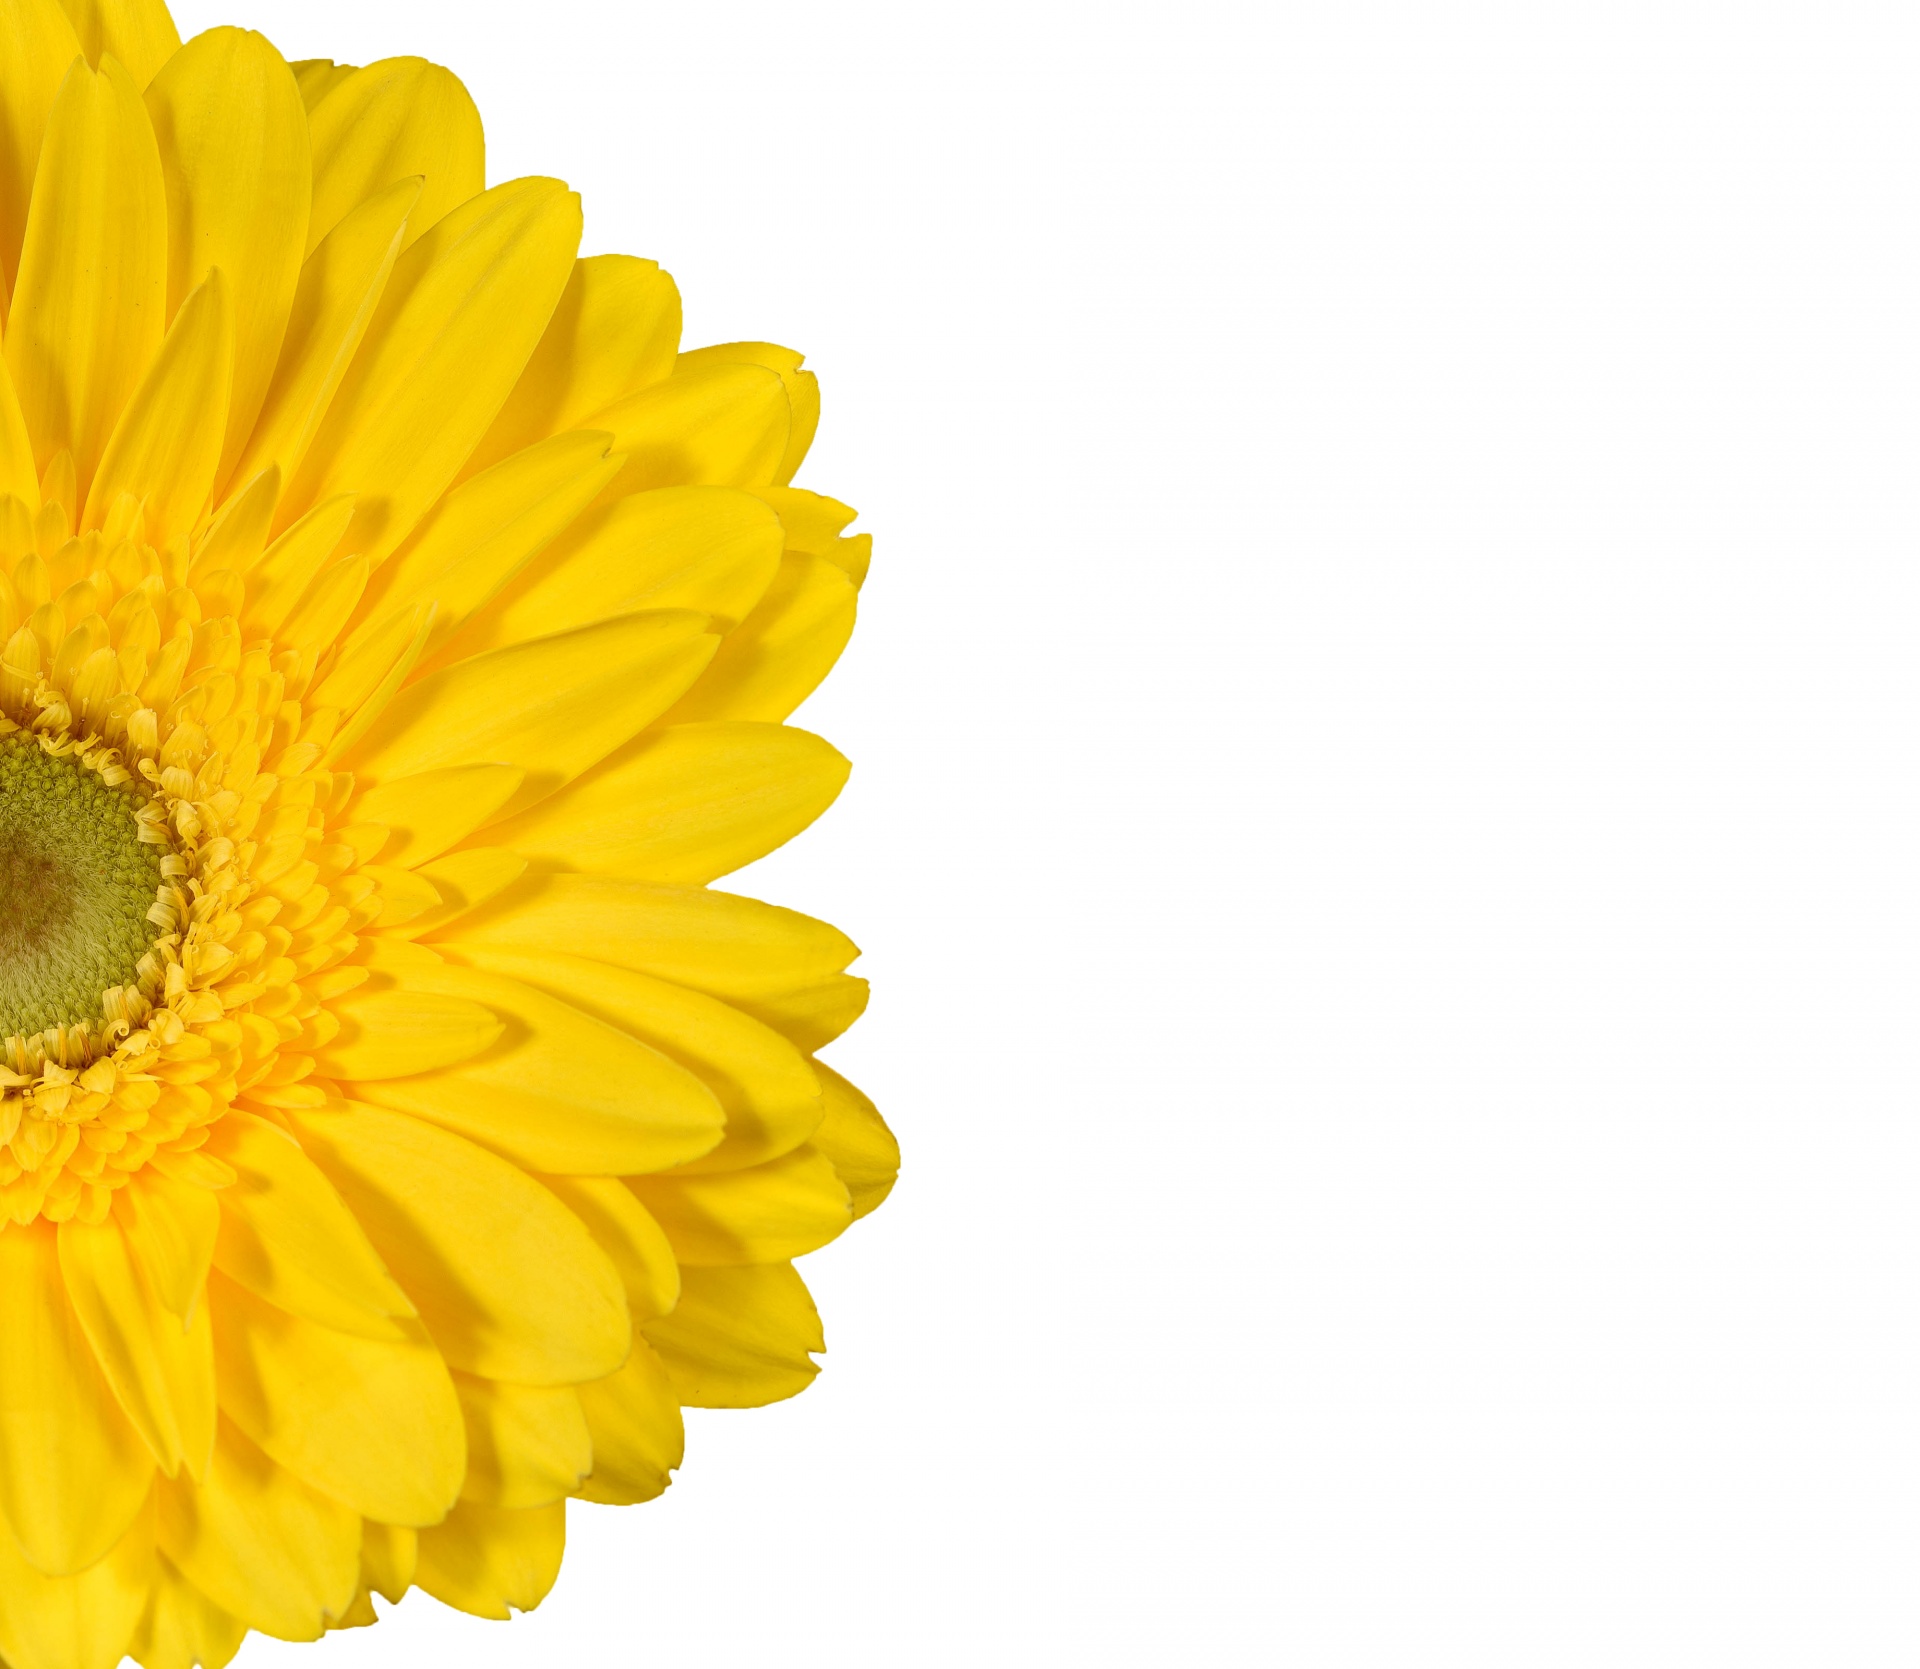 Yellow Gerbera Daisy Flower